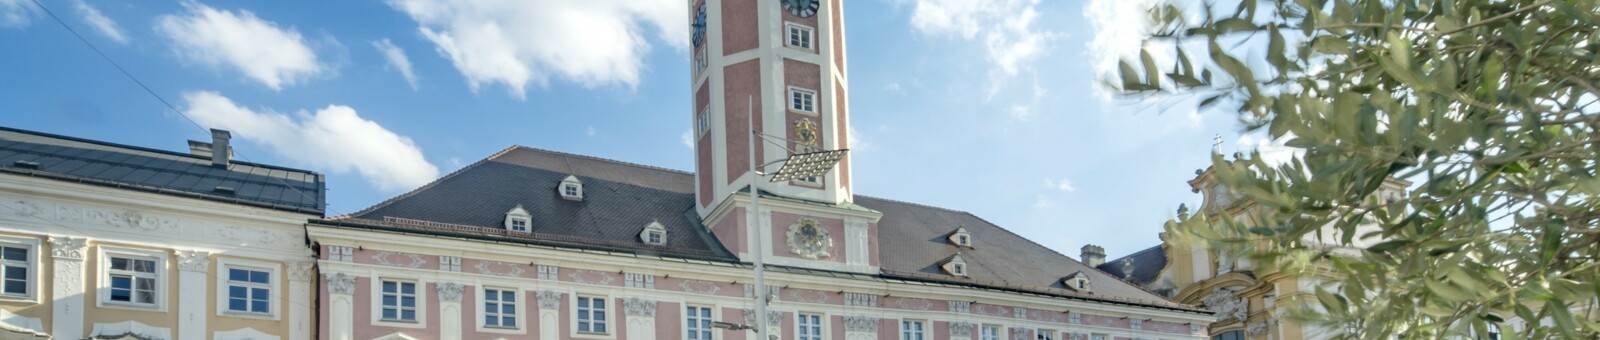     St. Pölten city hall square 